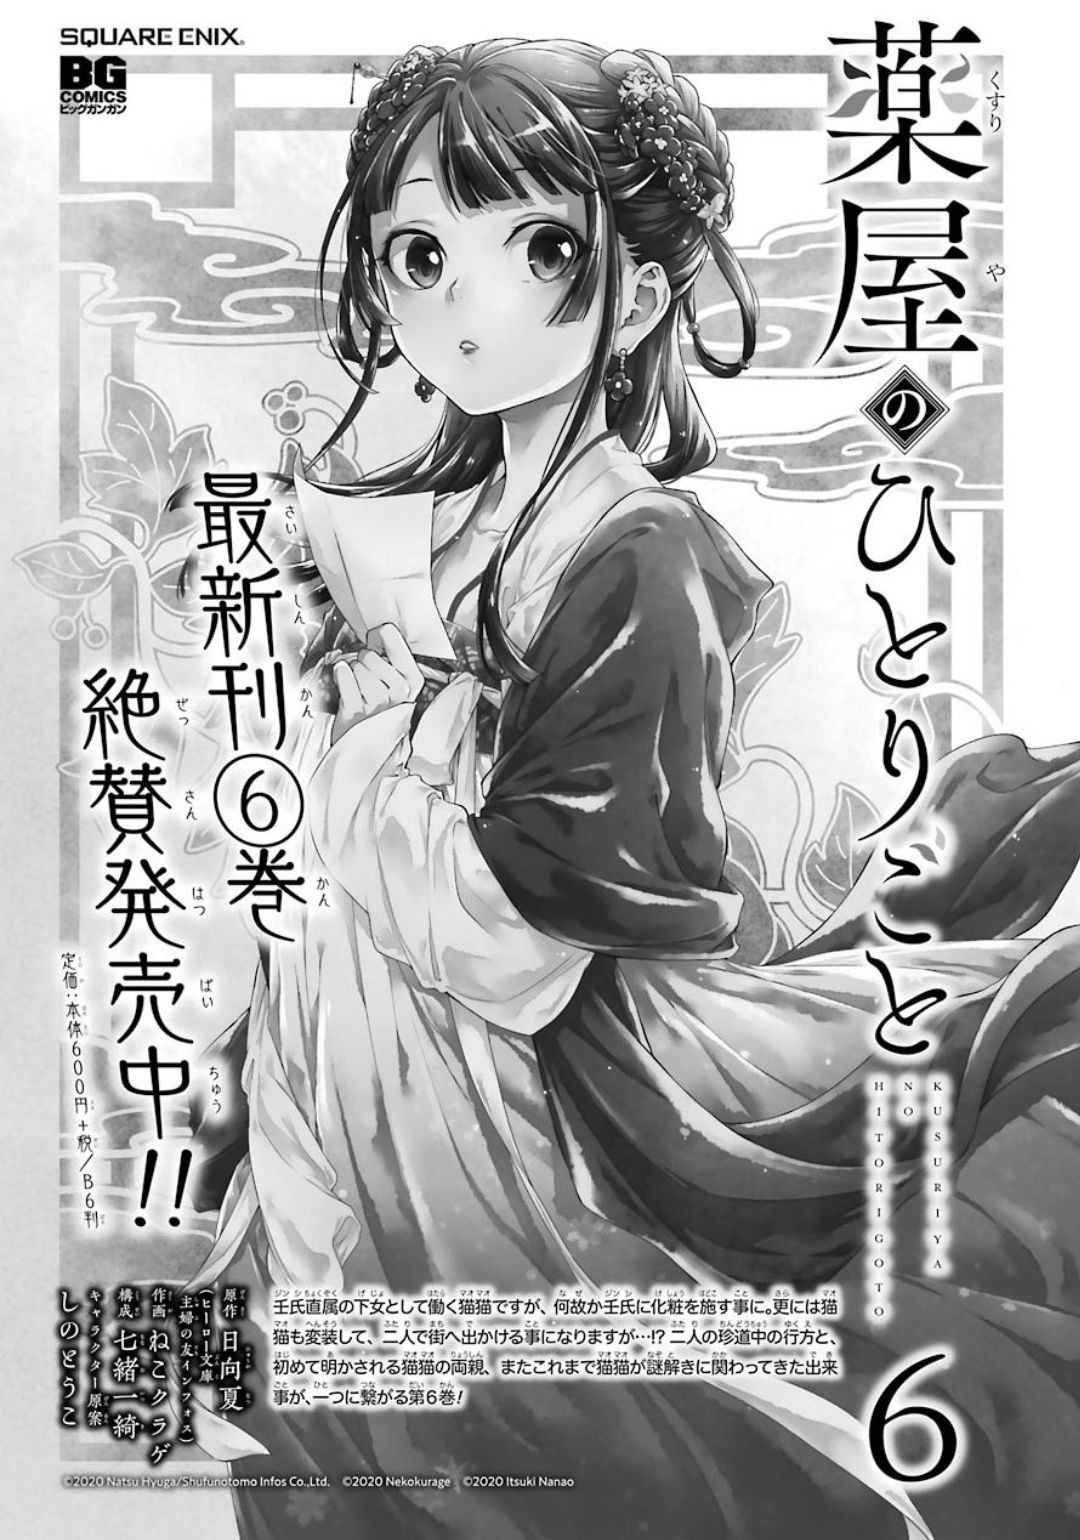 Kusuriya no Hitorigoto - Chapter 36-1 - Page 1